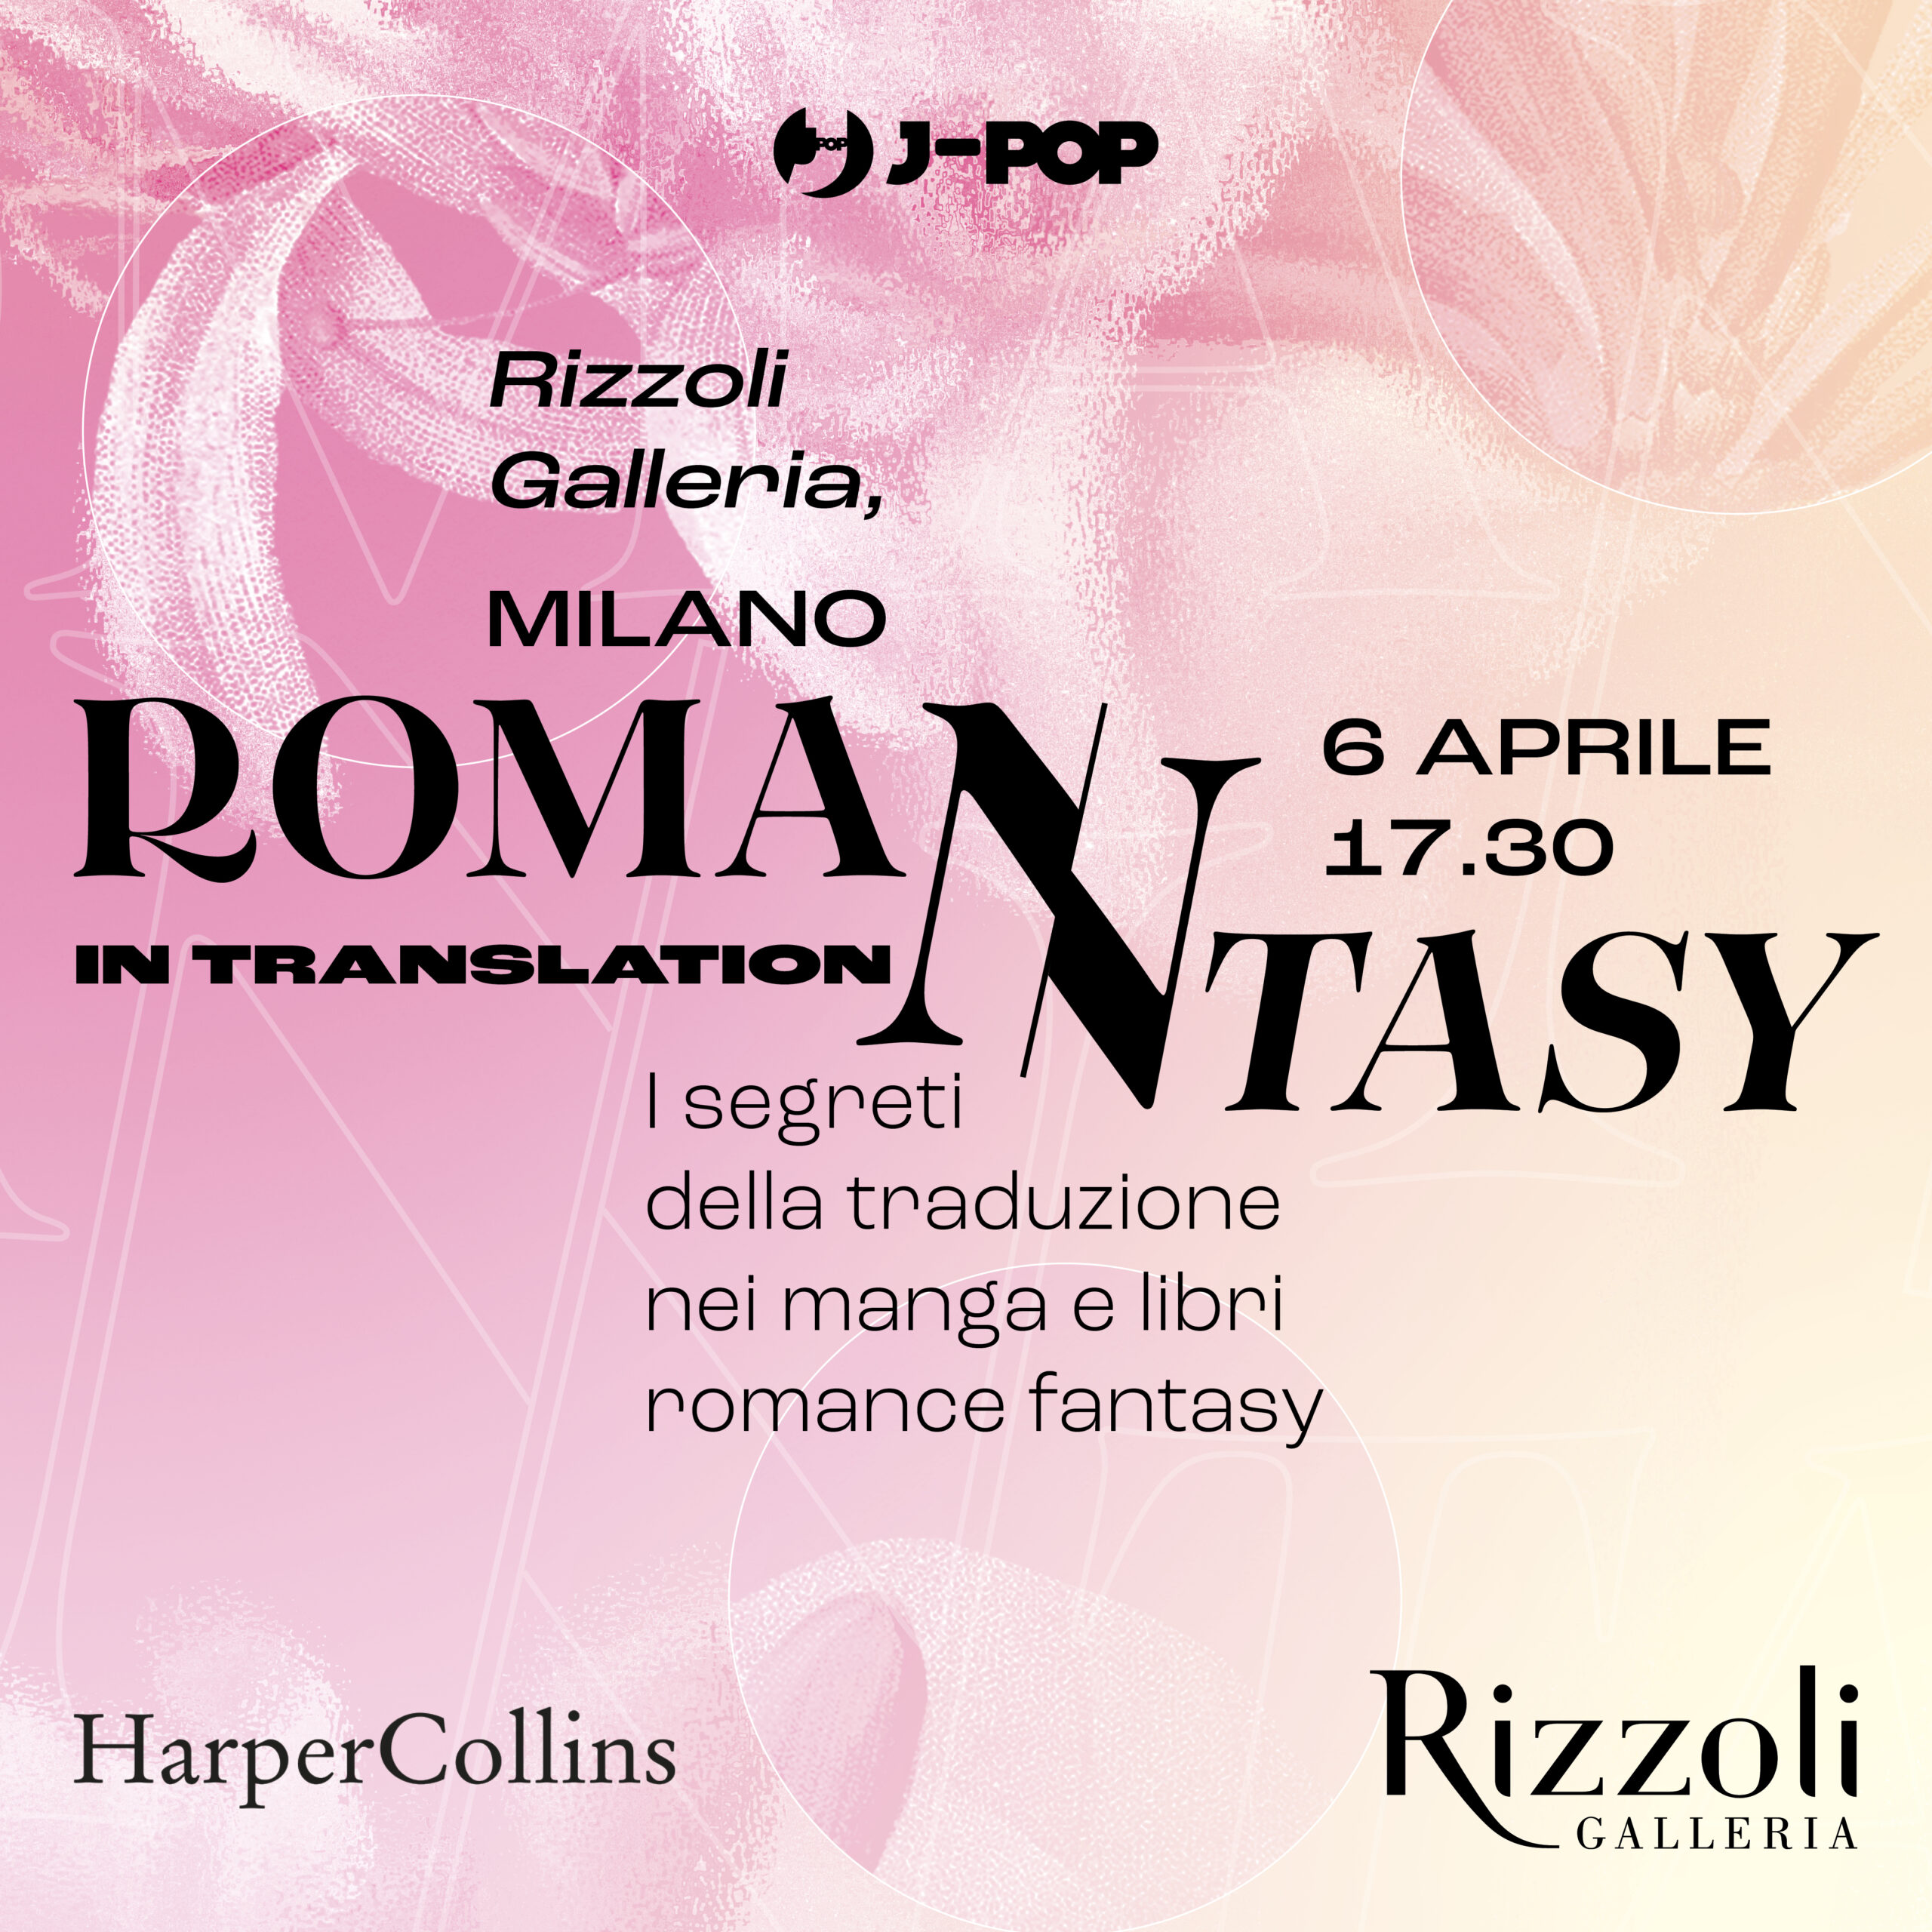 Romantasy in Translation con Christine Minutoli e Sara Benatti